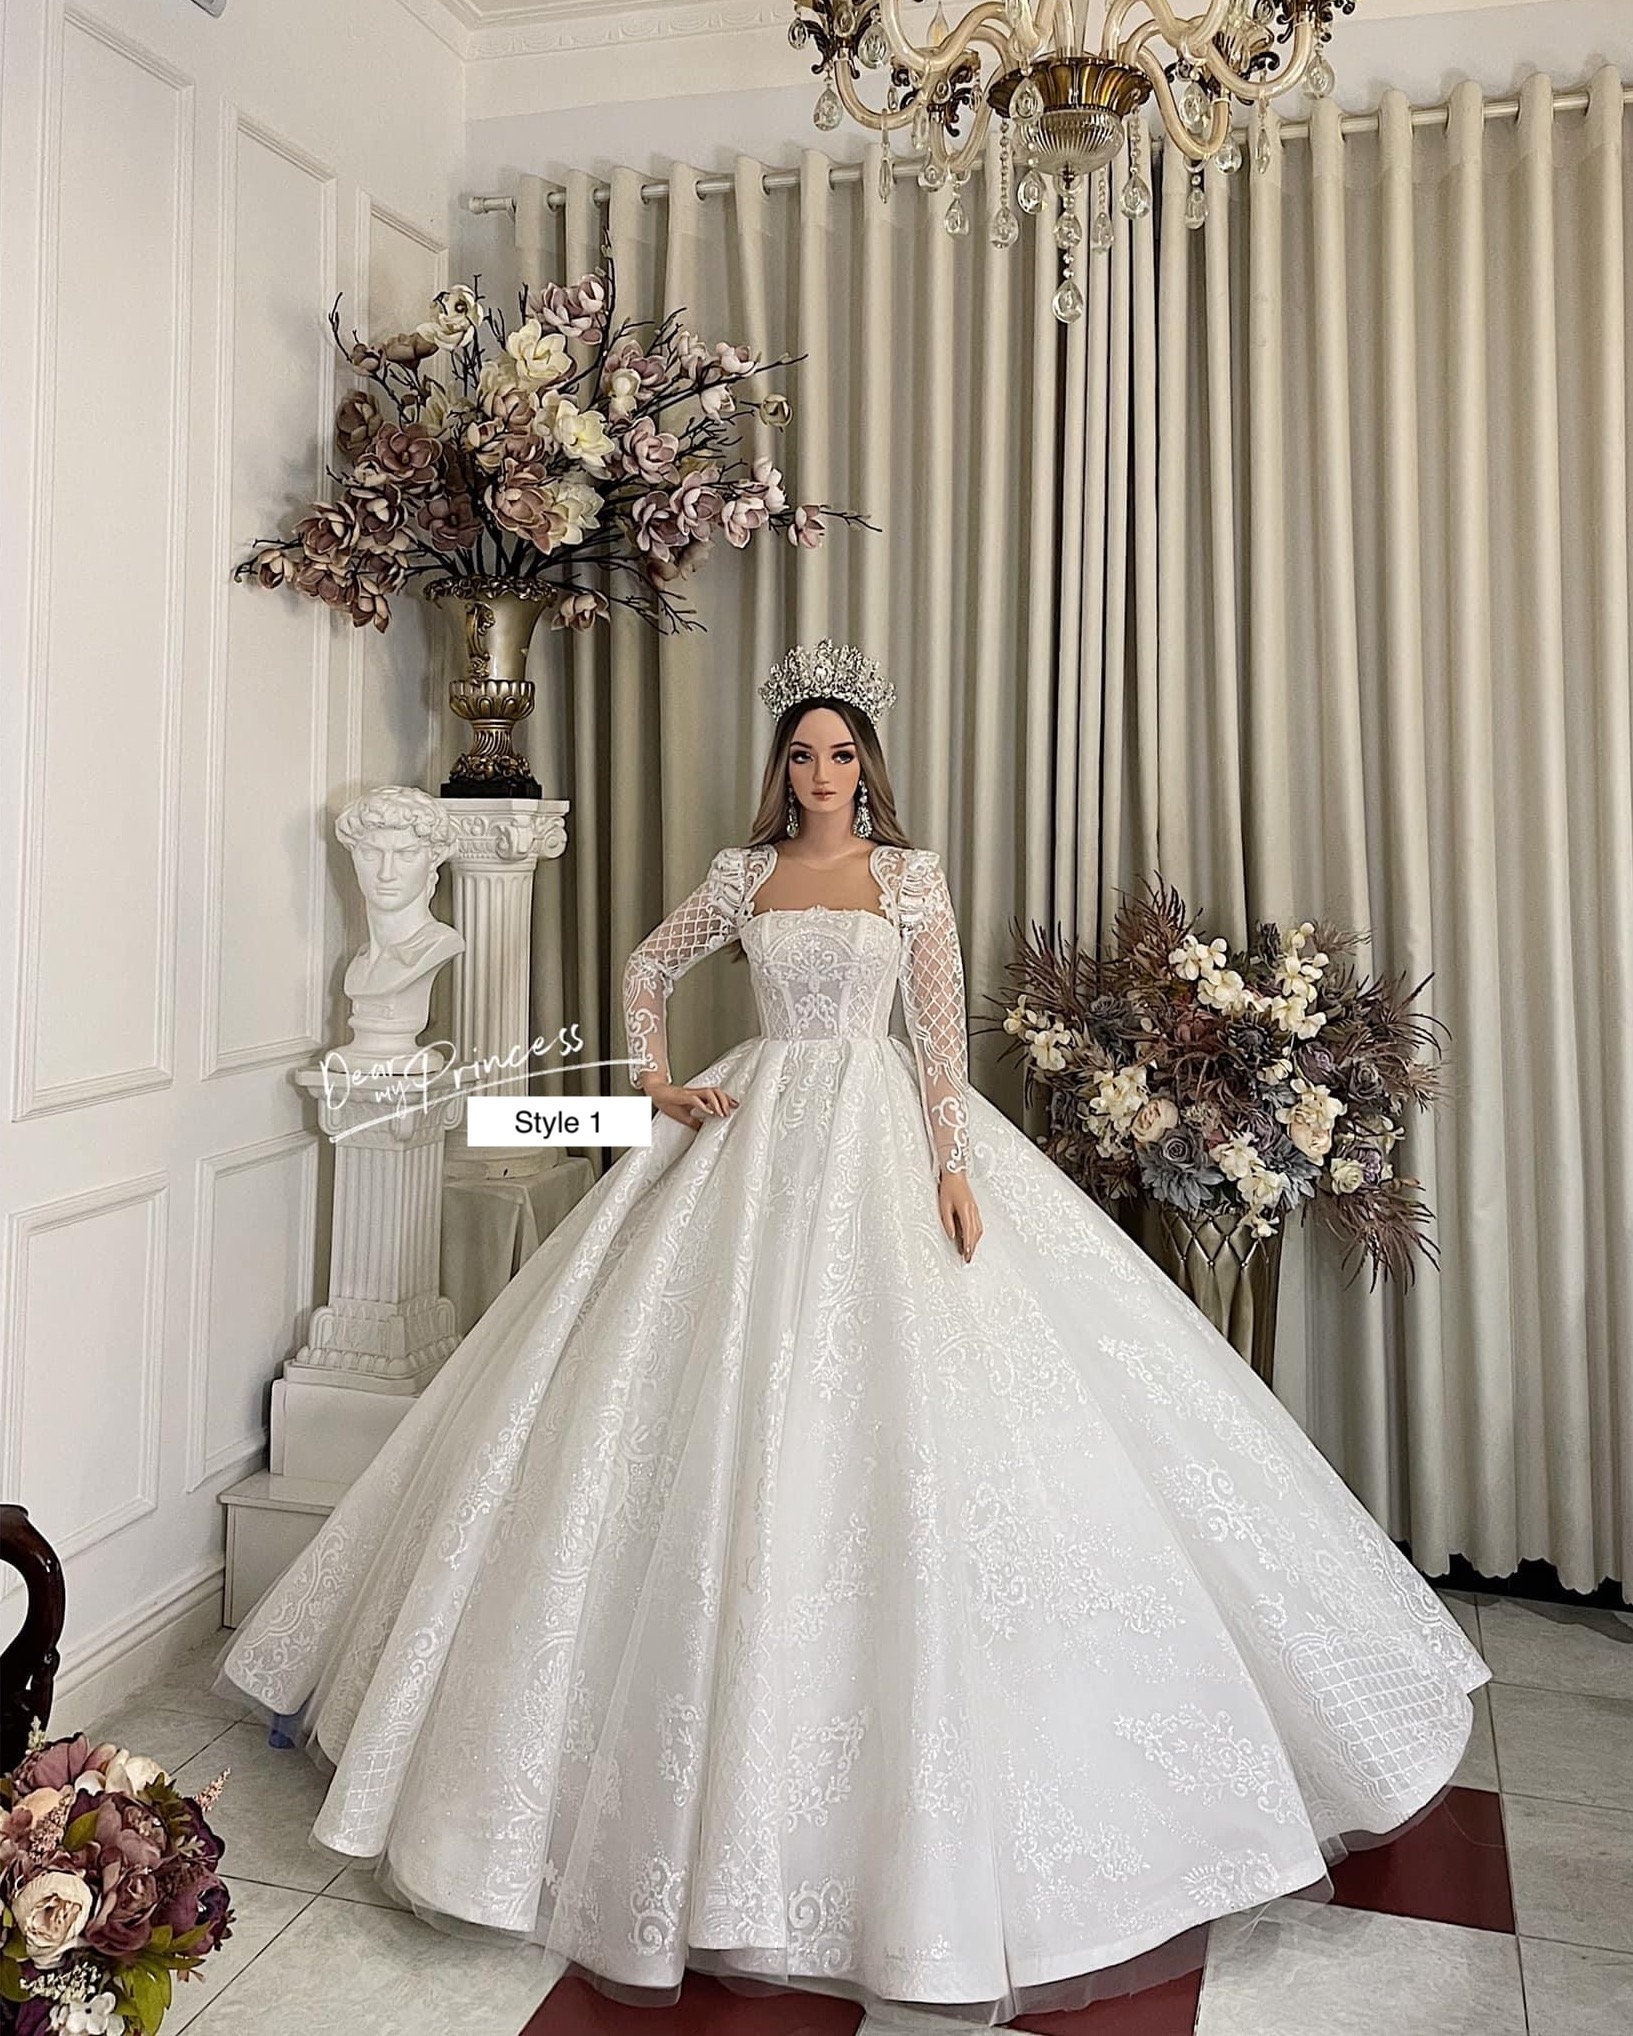 Tiered Organza Cap Sleeves Princess Wedding Ball Gown - VQ